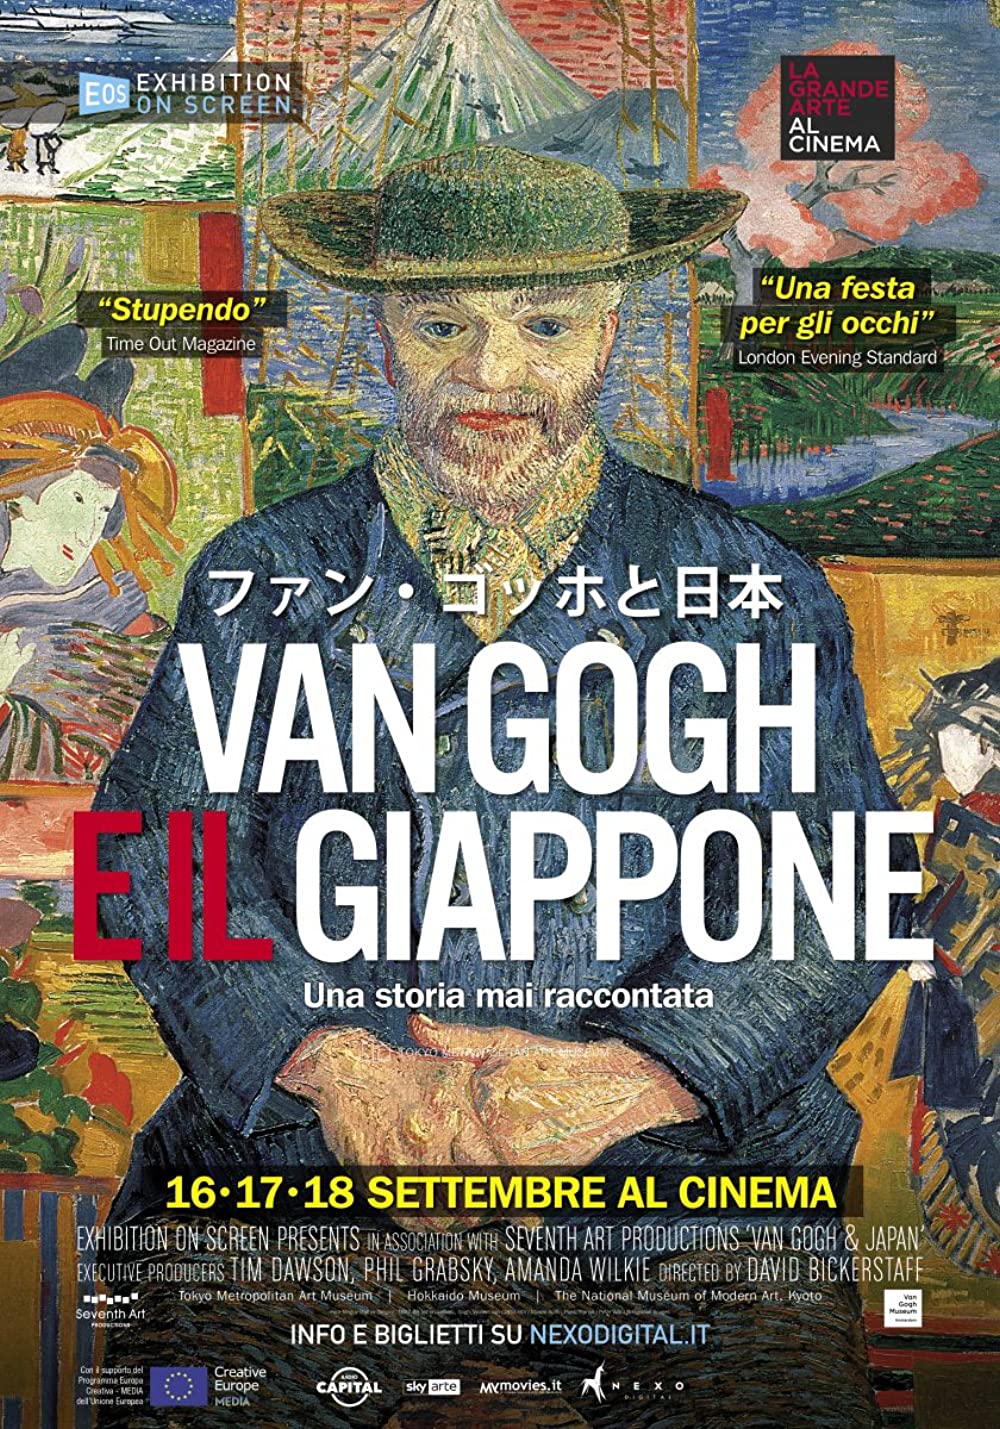 Exhibition On Screen: Van Gogh & Japan Main Poster